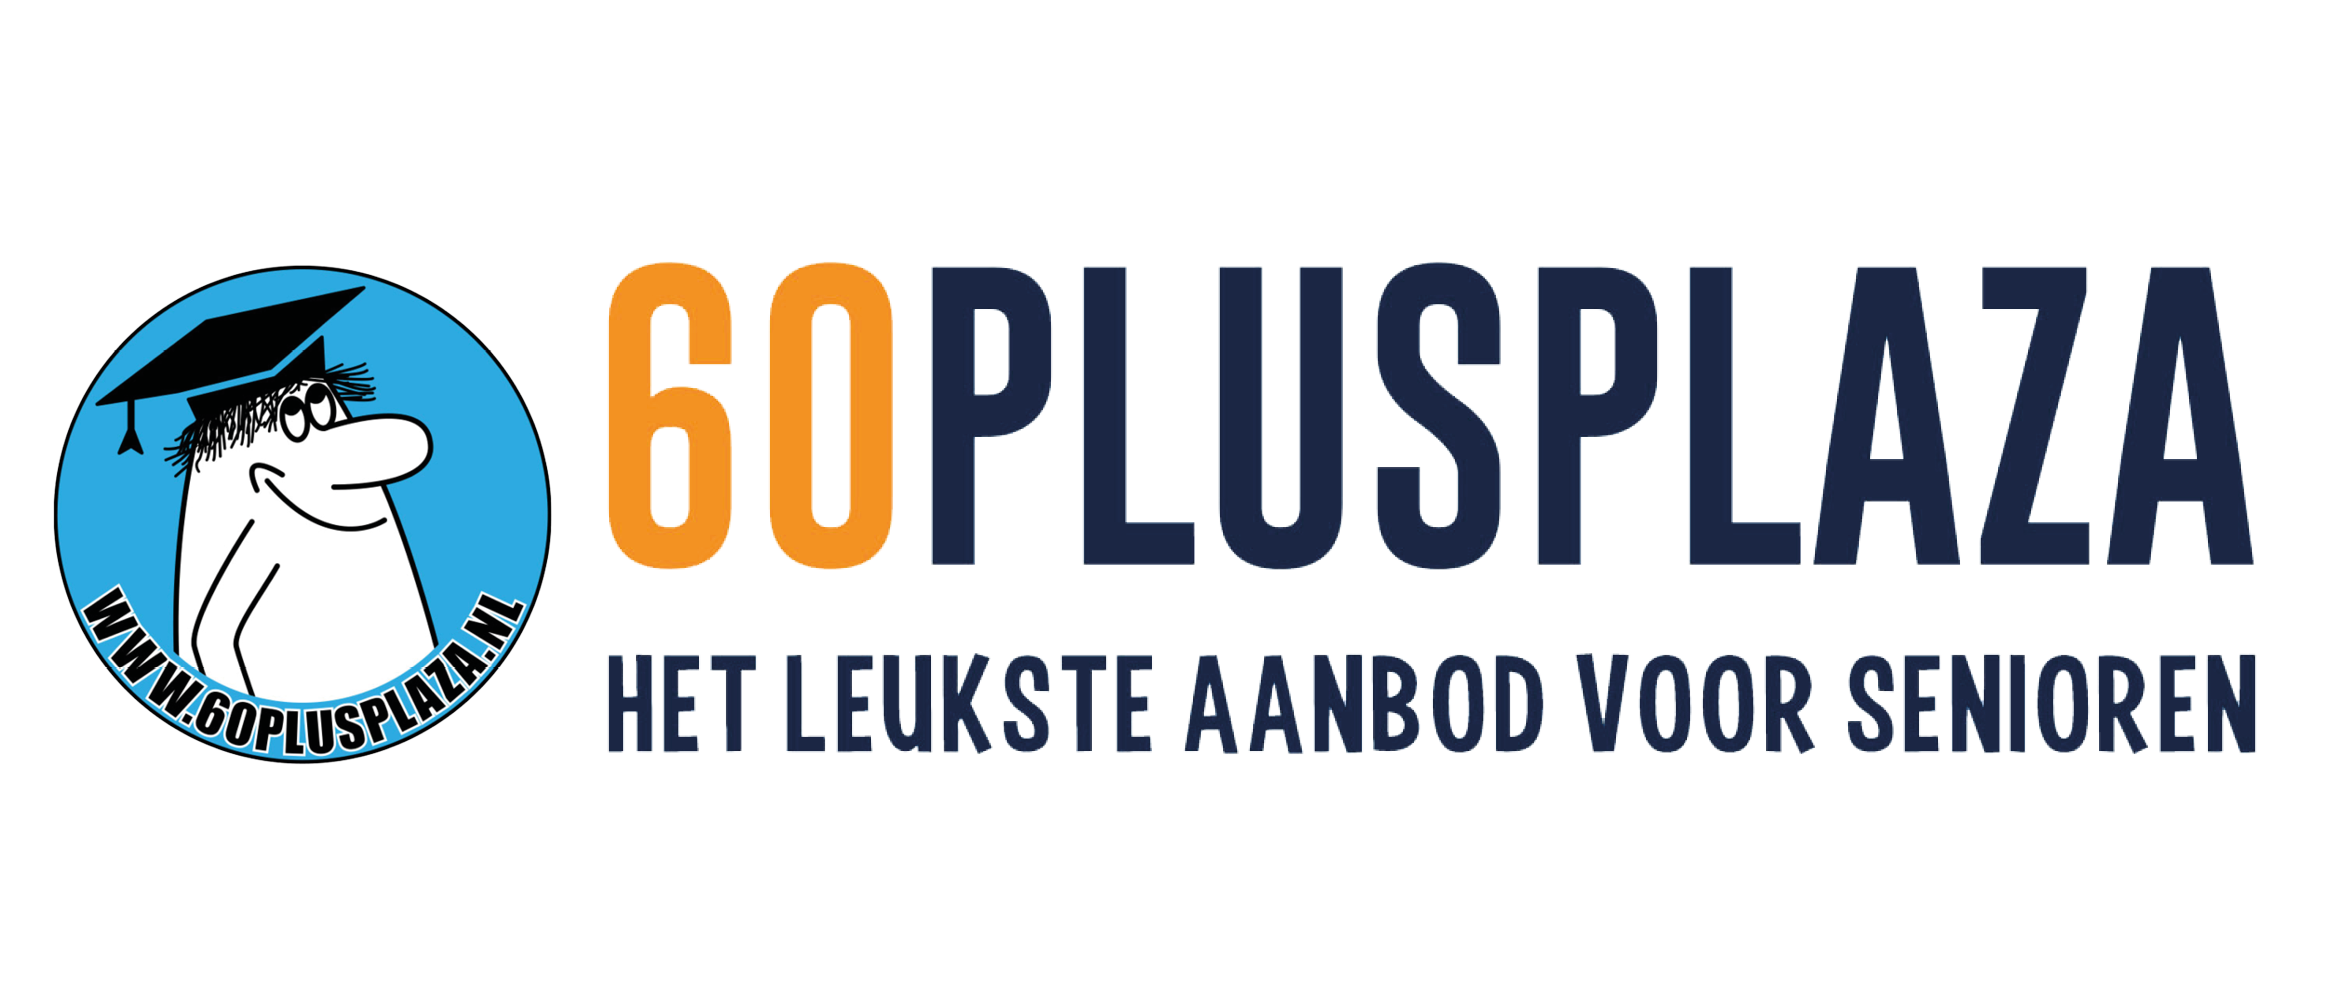 60plusplaza.nl